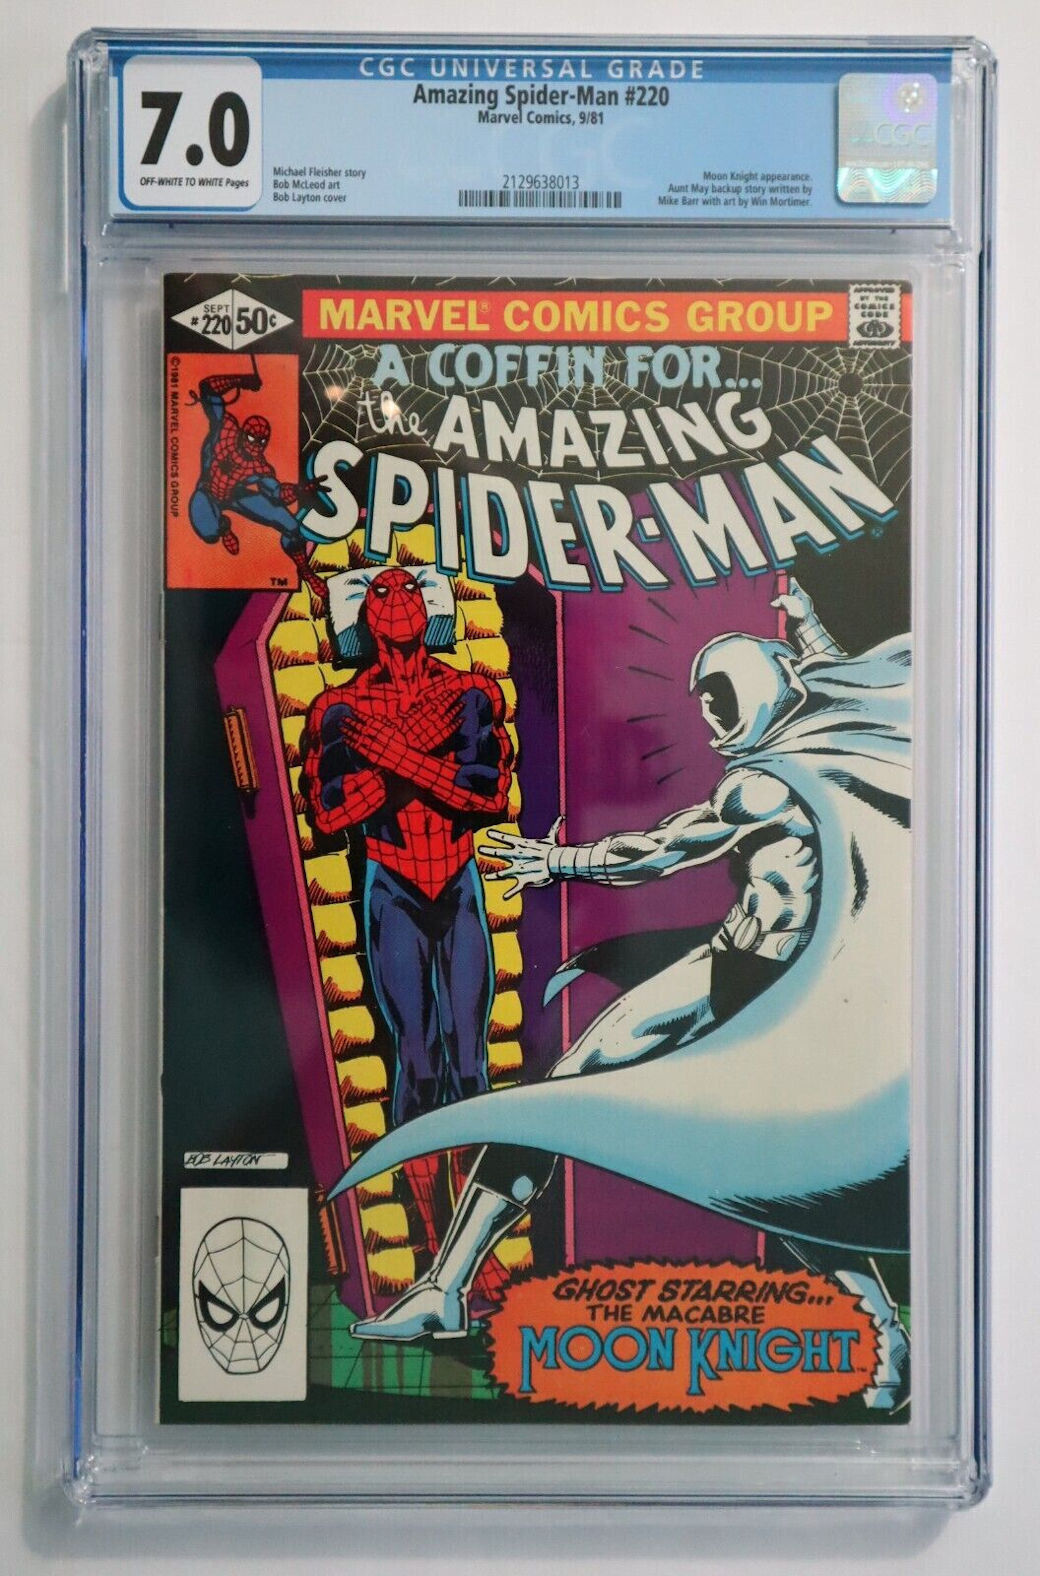 1981 Amazing Spider-Man 220 CGC 7.0 Moon Knight 50-cent cover,Marvel Comics 9/81 - $48.29